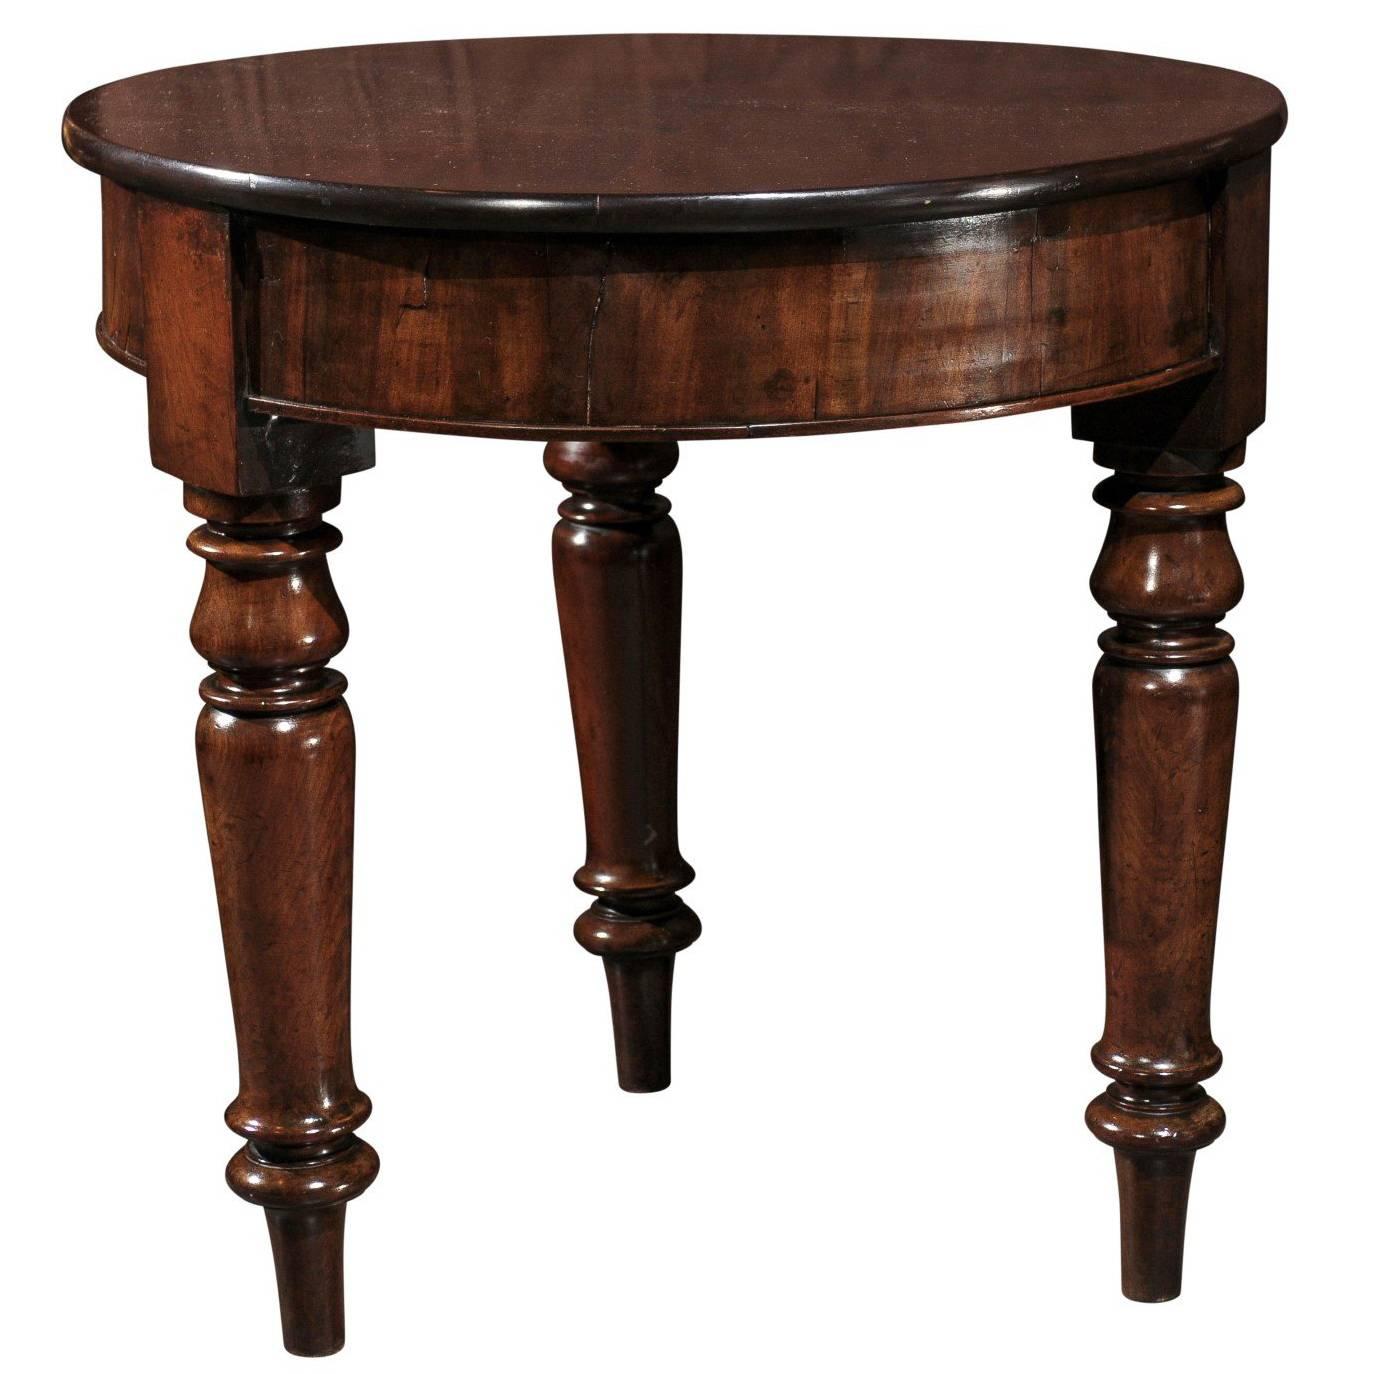 Mid 19th century English Mahogany Round Table Raised on Three Turned Legs For Sale